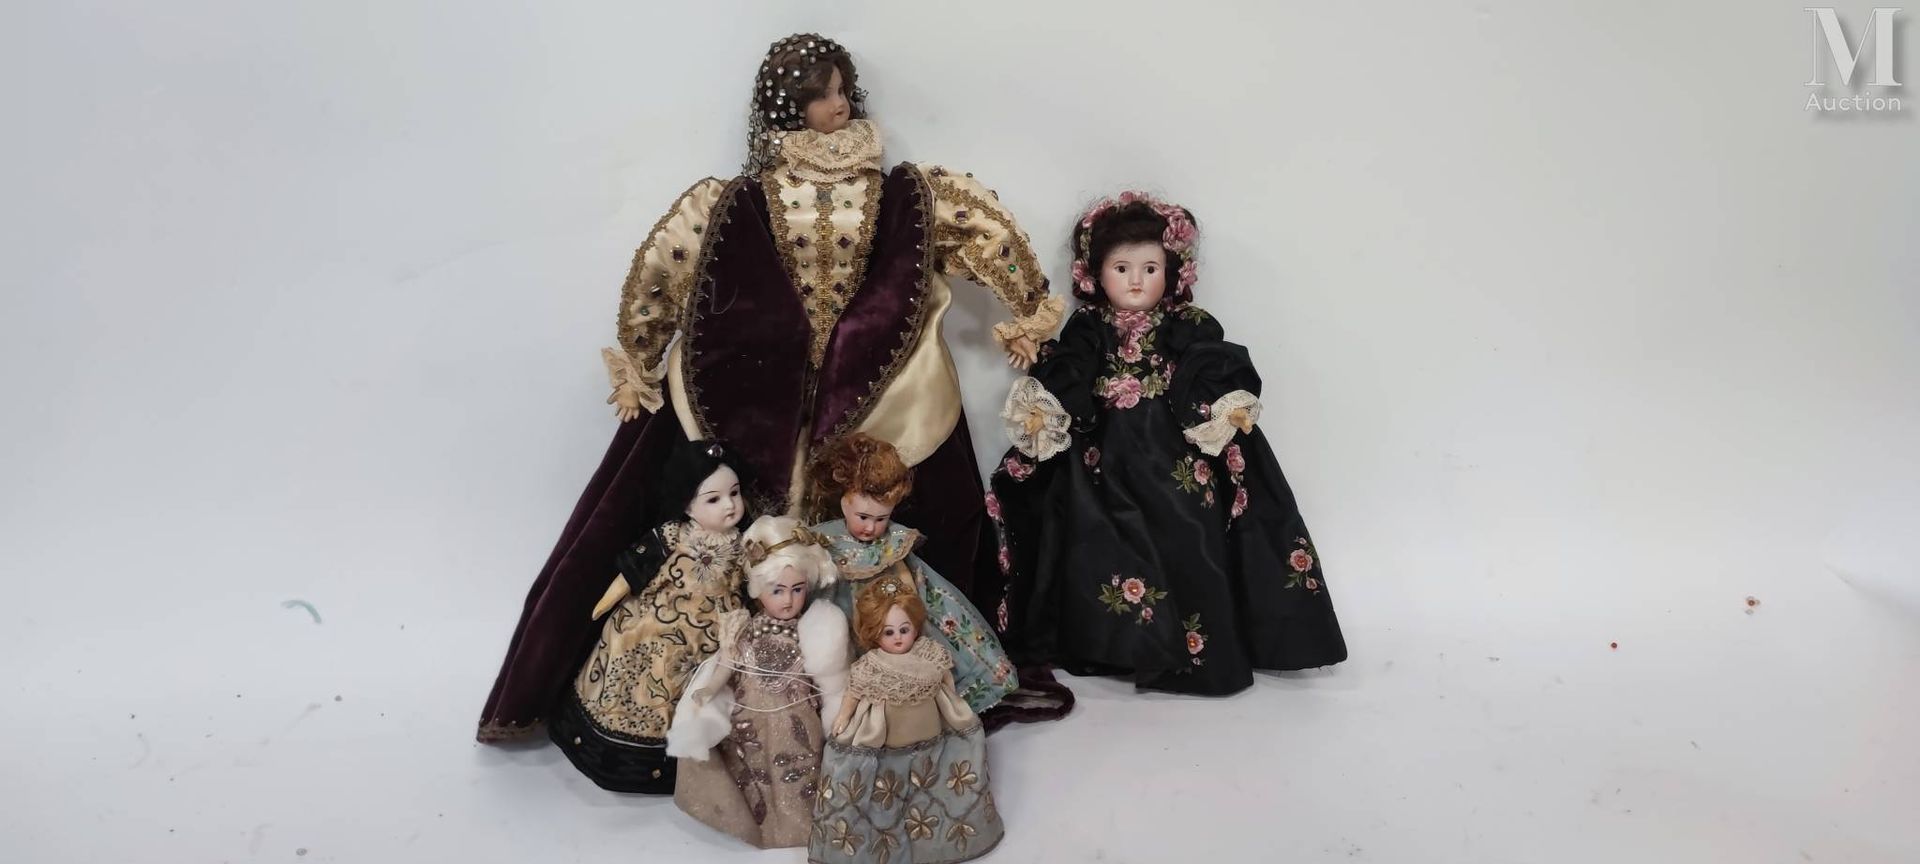 Lot de six poupées Mignonettes 头部为饼干色，手臂和身体为构图色。有些人穿着18世纪的风格。

高：12至29厘米。